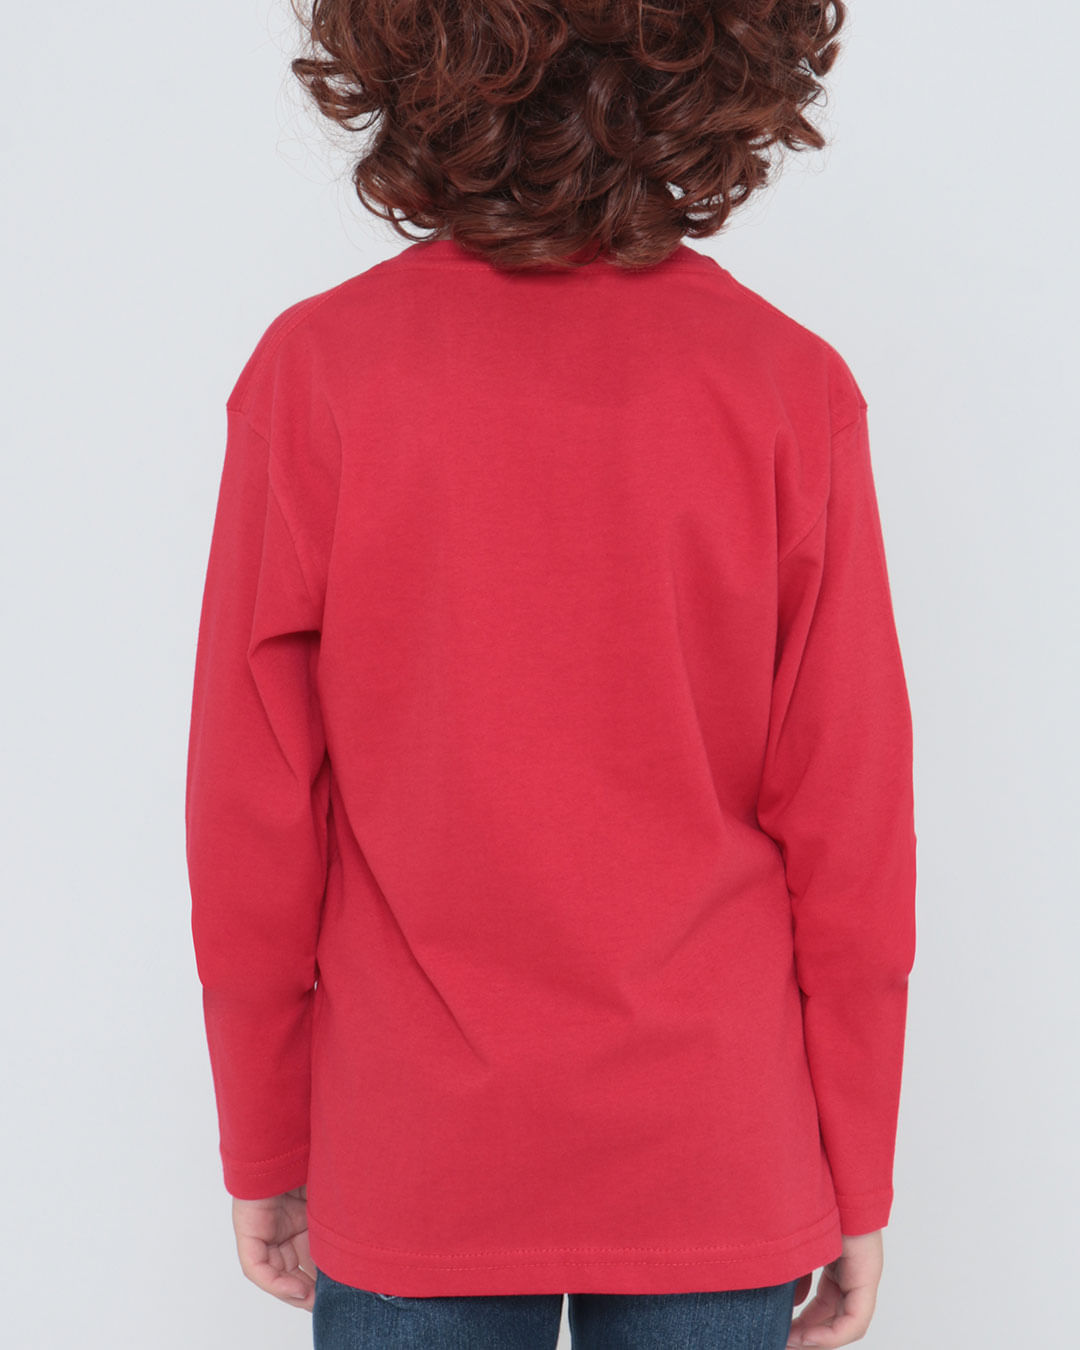 Camiseta-Ch26602-Ml-M410-Fl---Vermelho-Medio